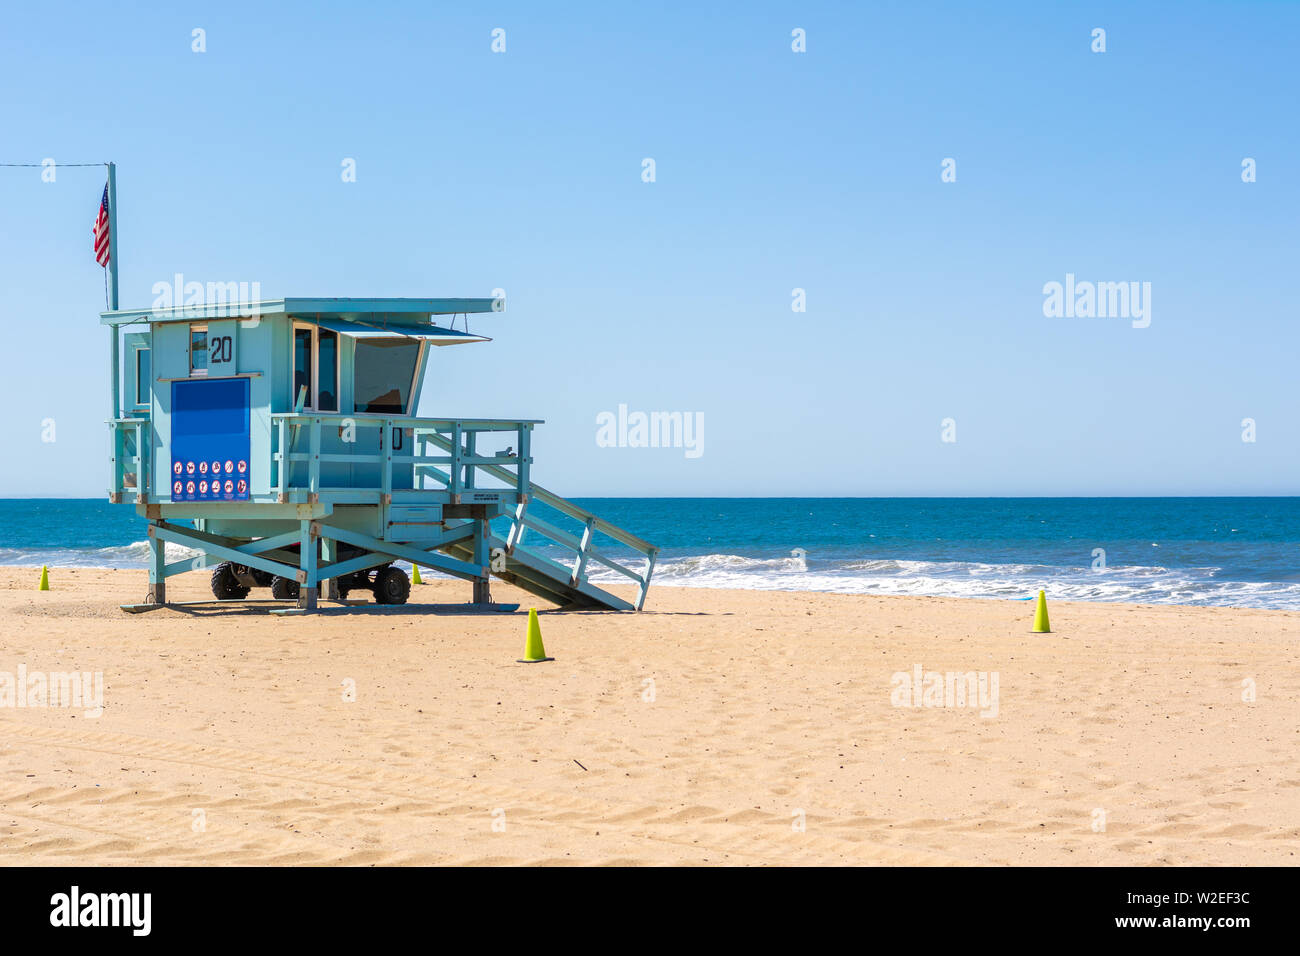 Lifeguard tower at Santa Monica beach in California, USA Stock Photo